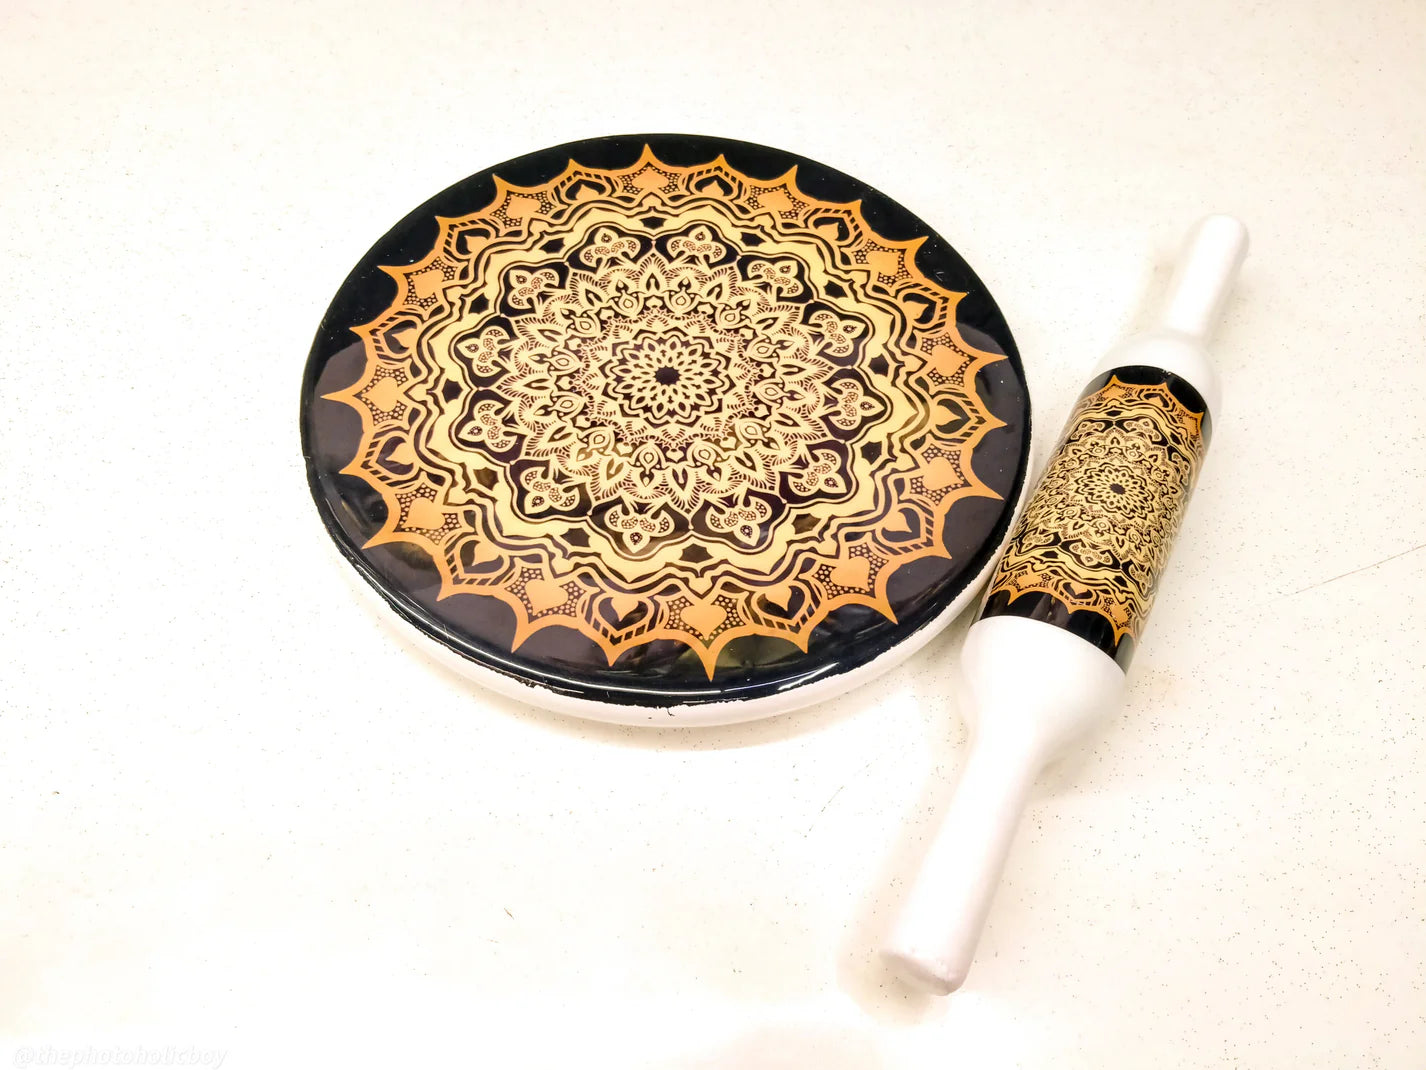 Handcrafted White Marble Roti Maker with Wooden Belan Enamel Prints | Indian Chakla Belan 10 Inch with Diameter